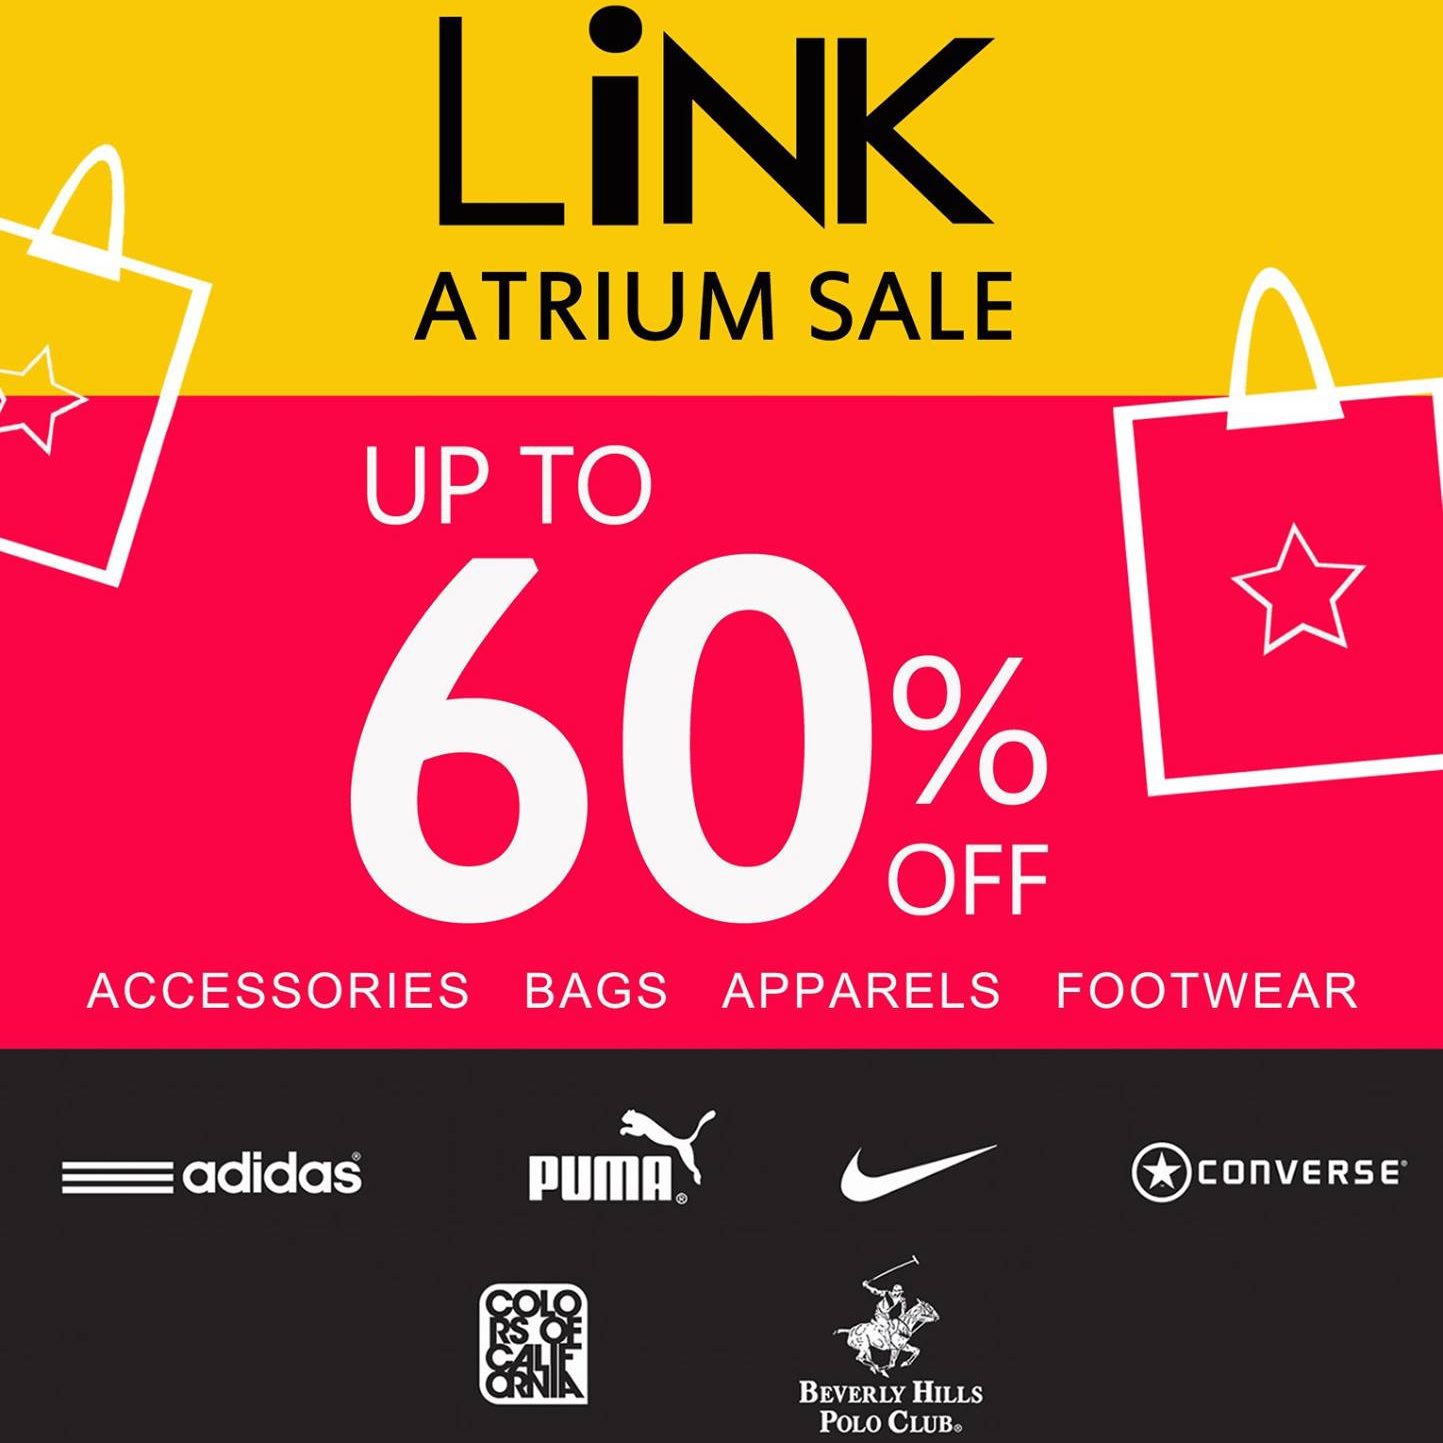 LINK Atrium Sale Singapore Promotion 11 to 17 Jul 2016